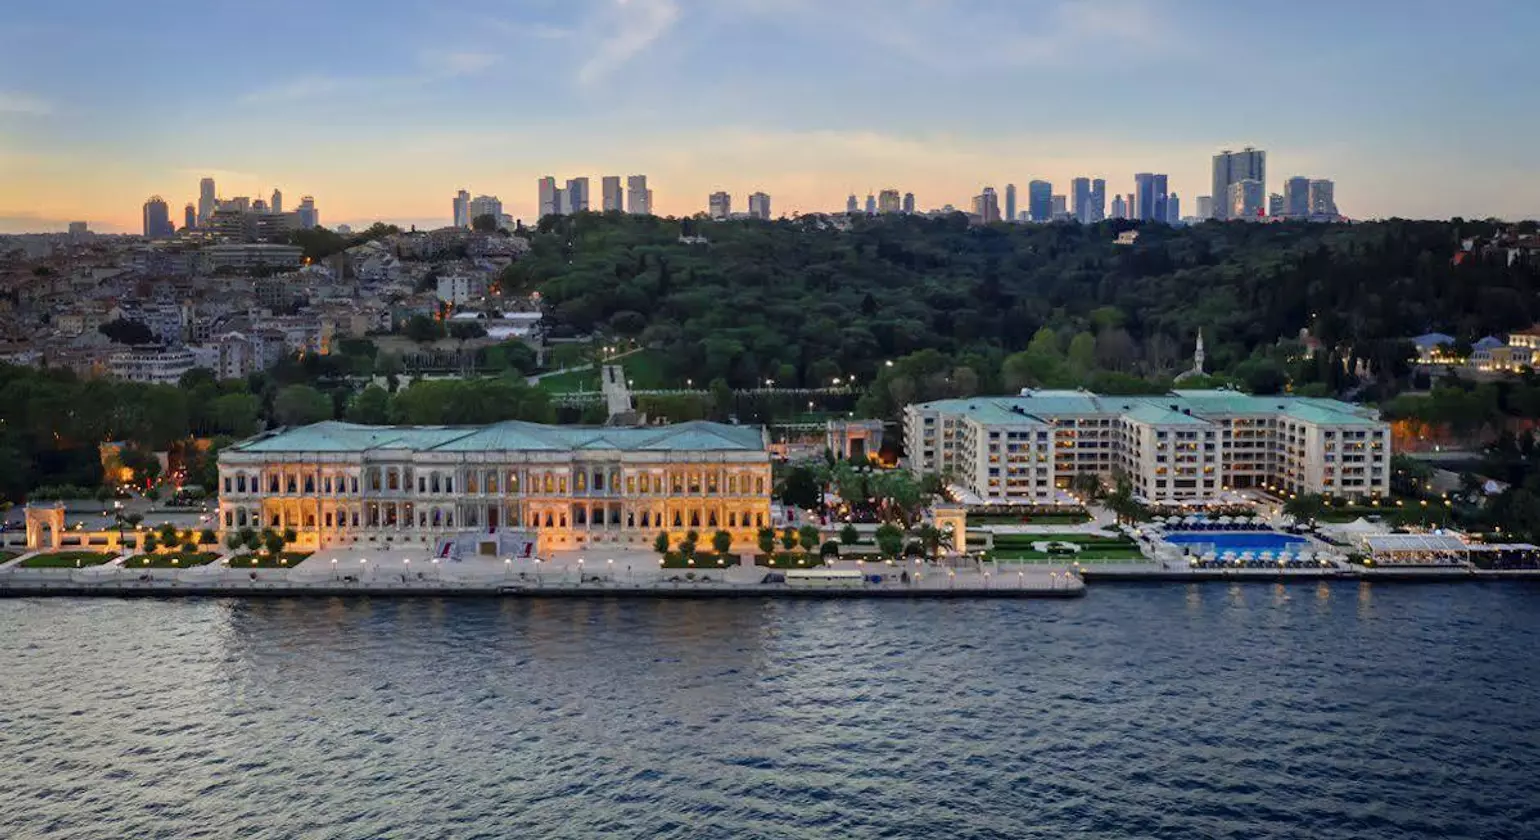 Çıragan Palace Kempinski Istanbul